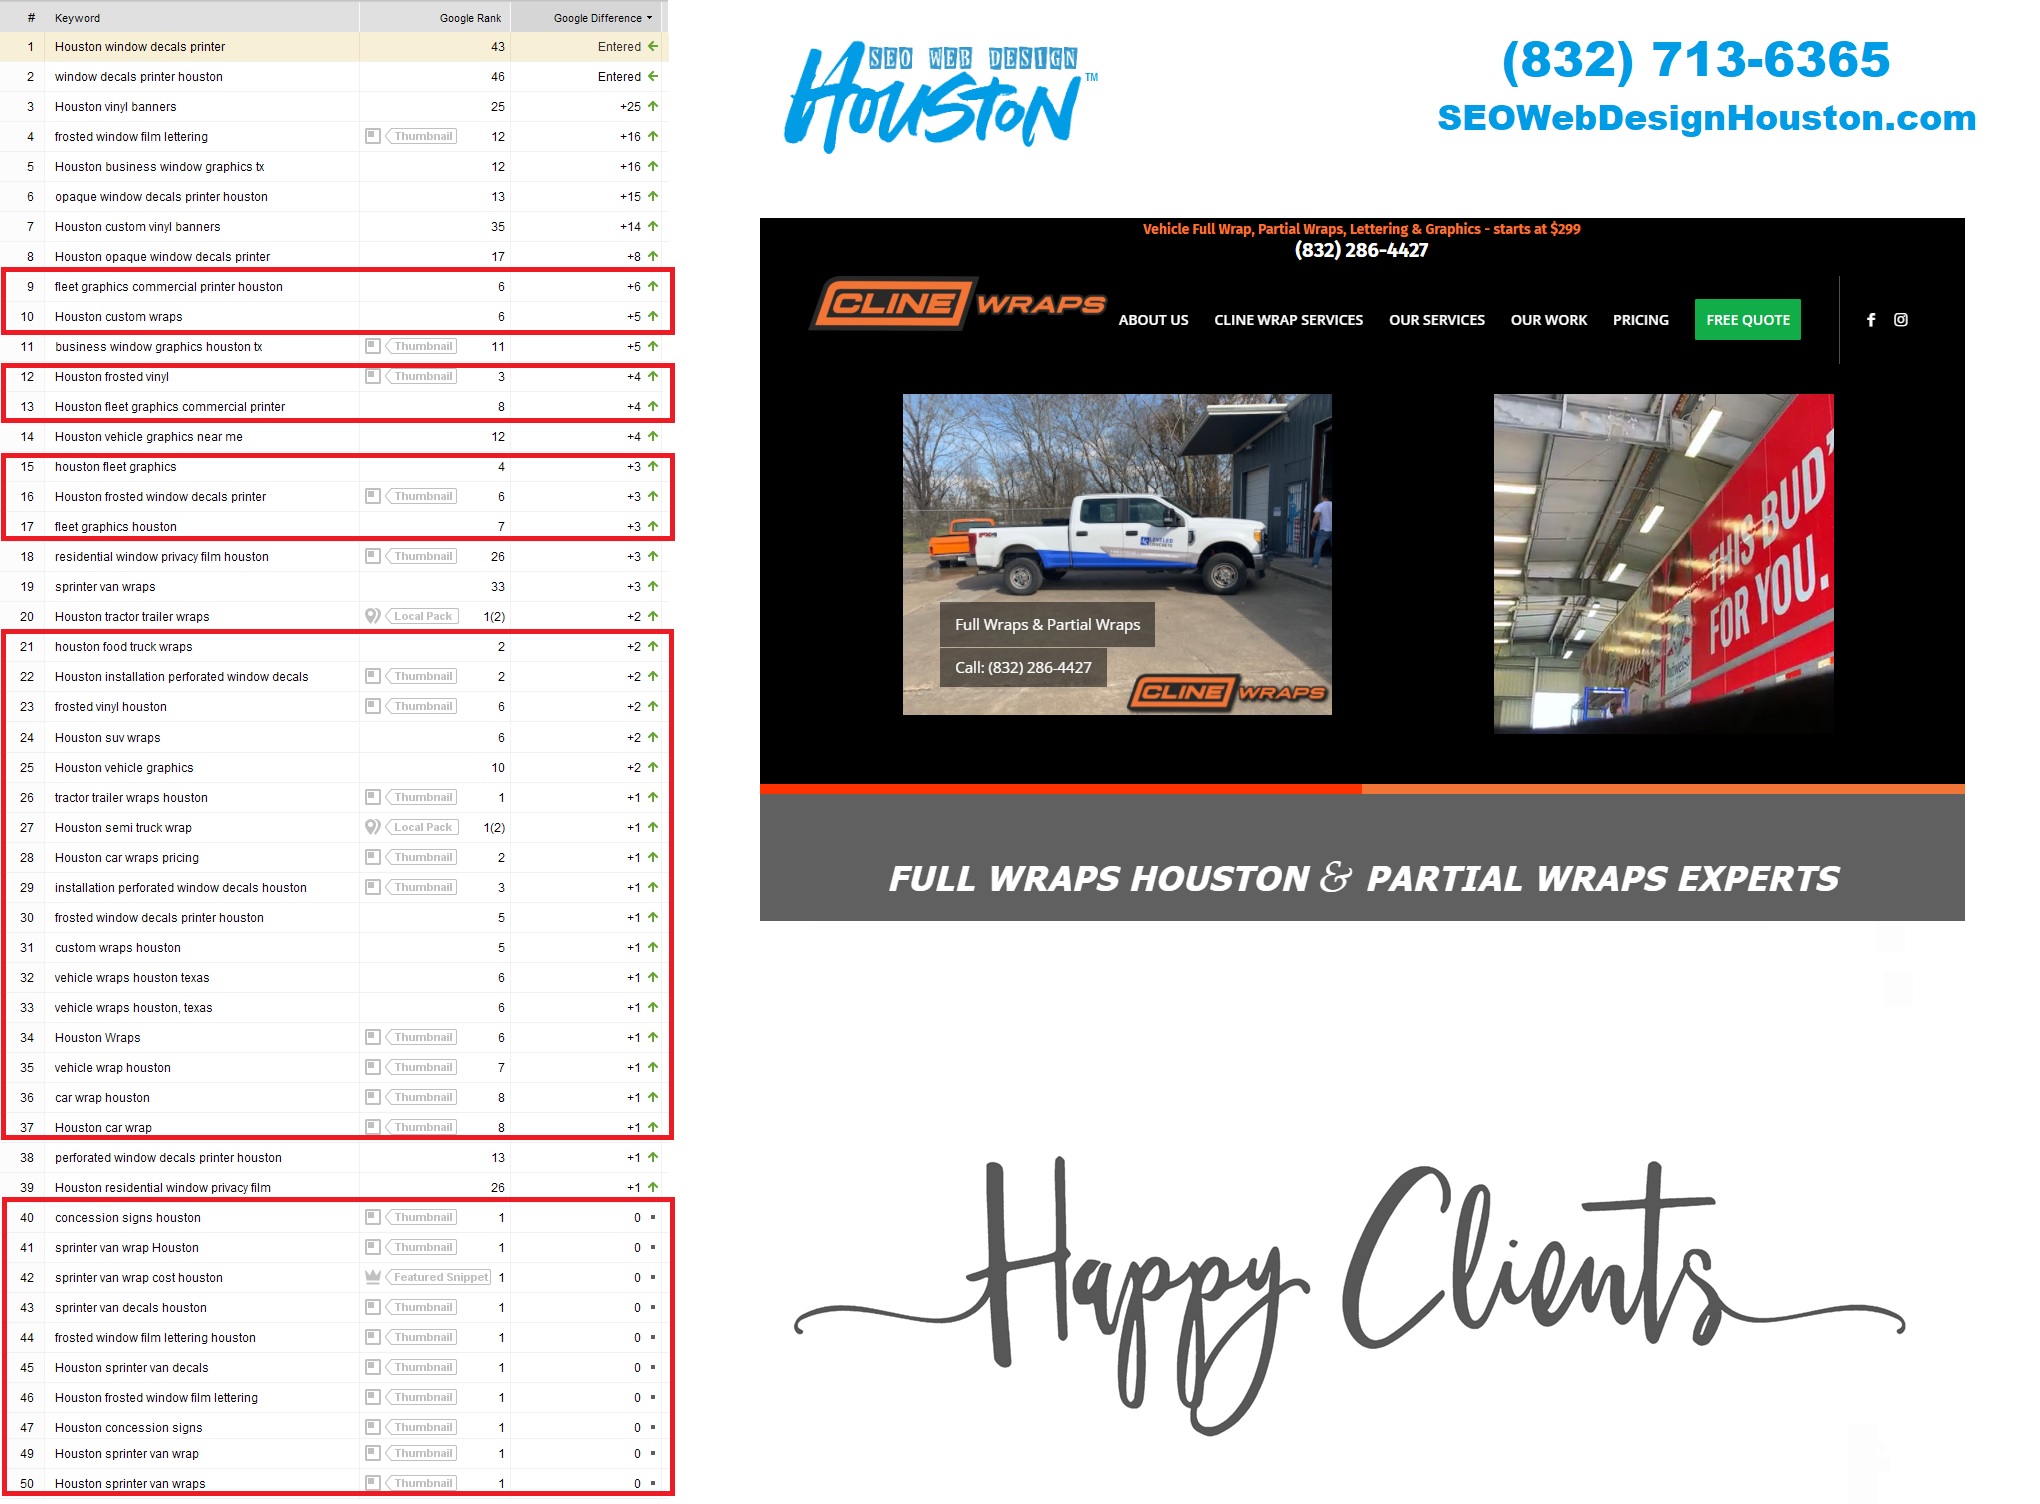 SEO Customer Review Results - SEO Web Design Houston - SEO Houston Services